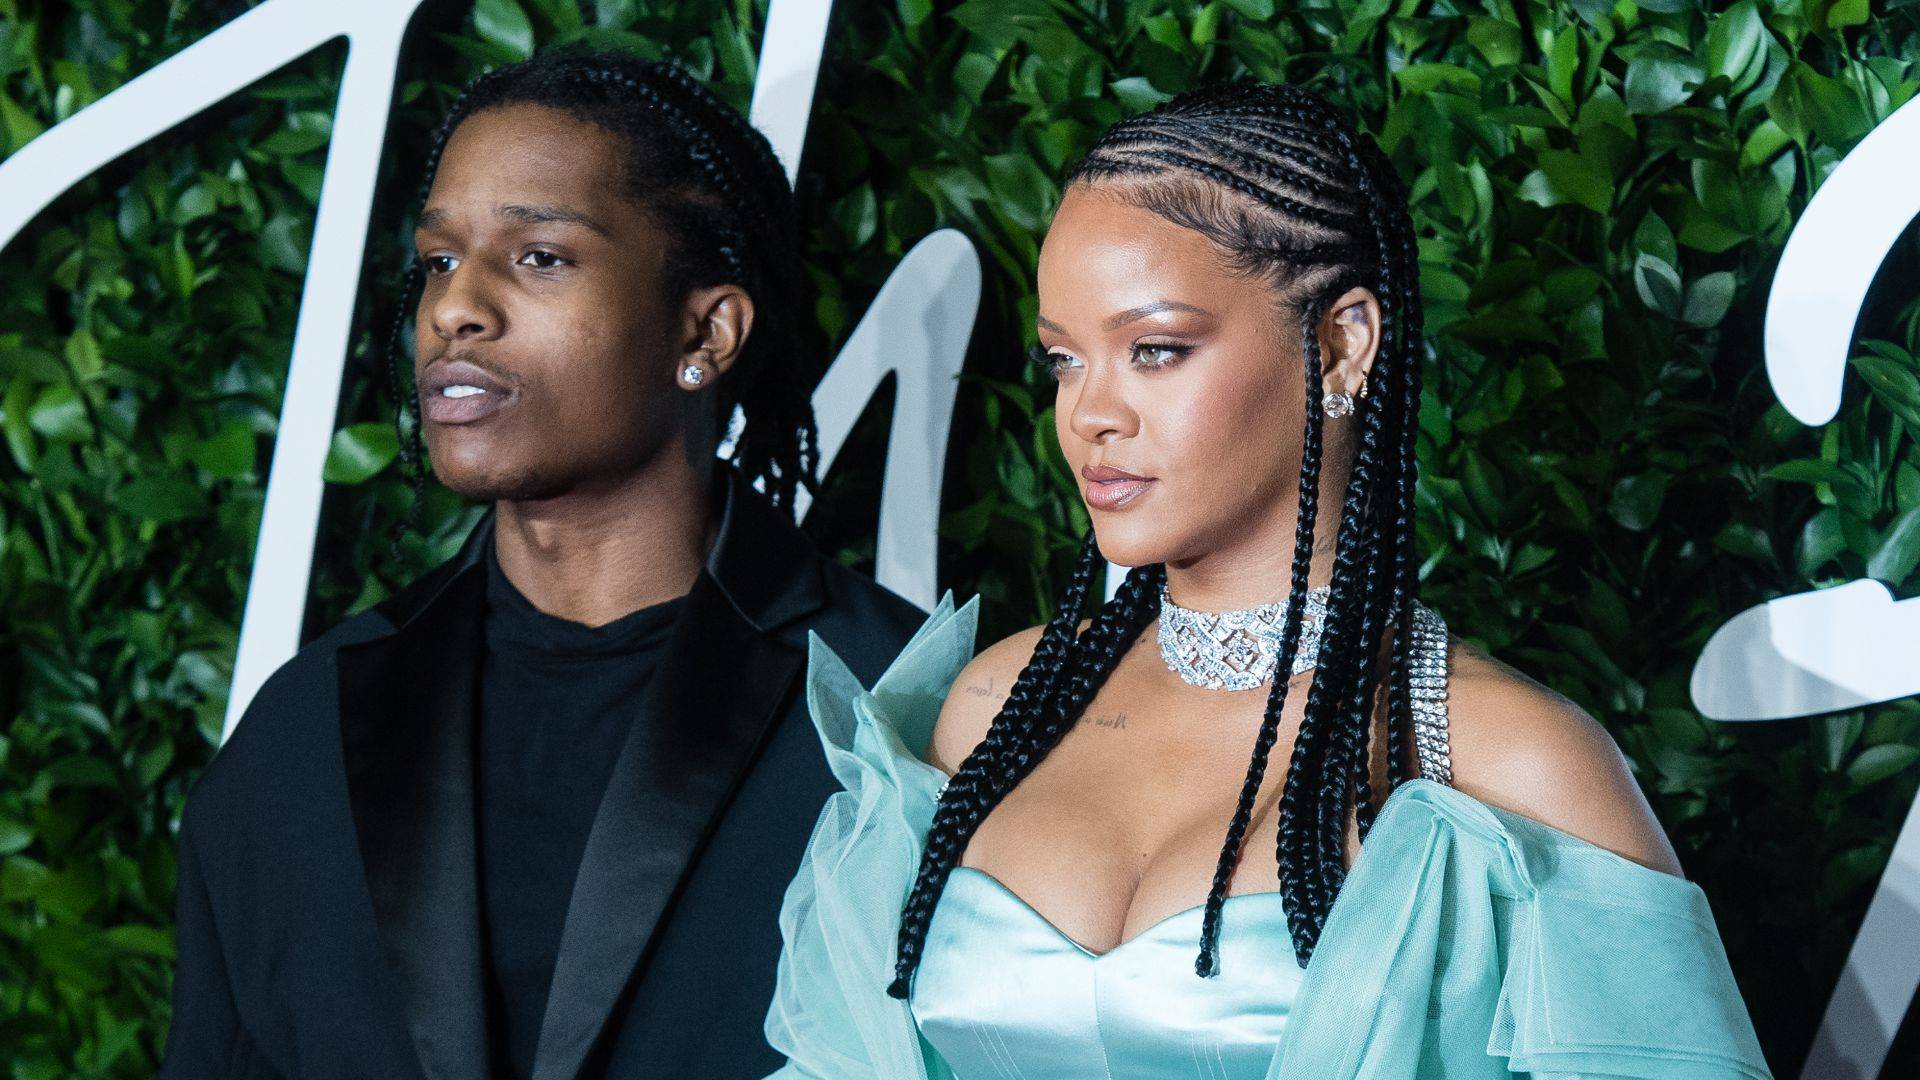 Rihanna in aqua dress standing alongside A$AP Rocky looking off camera